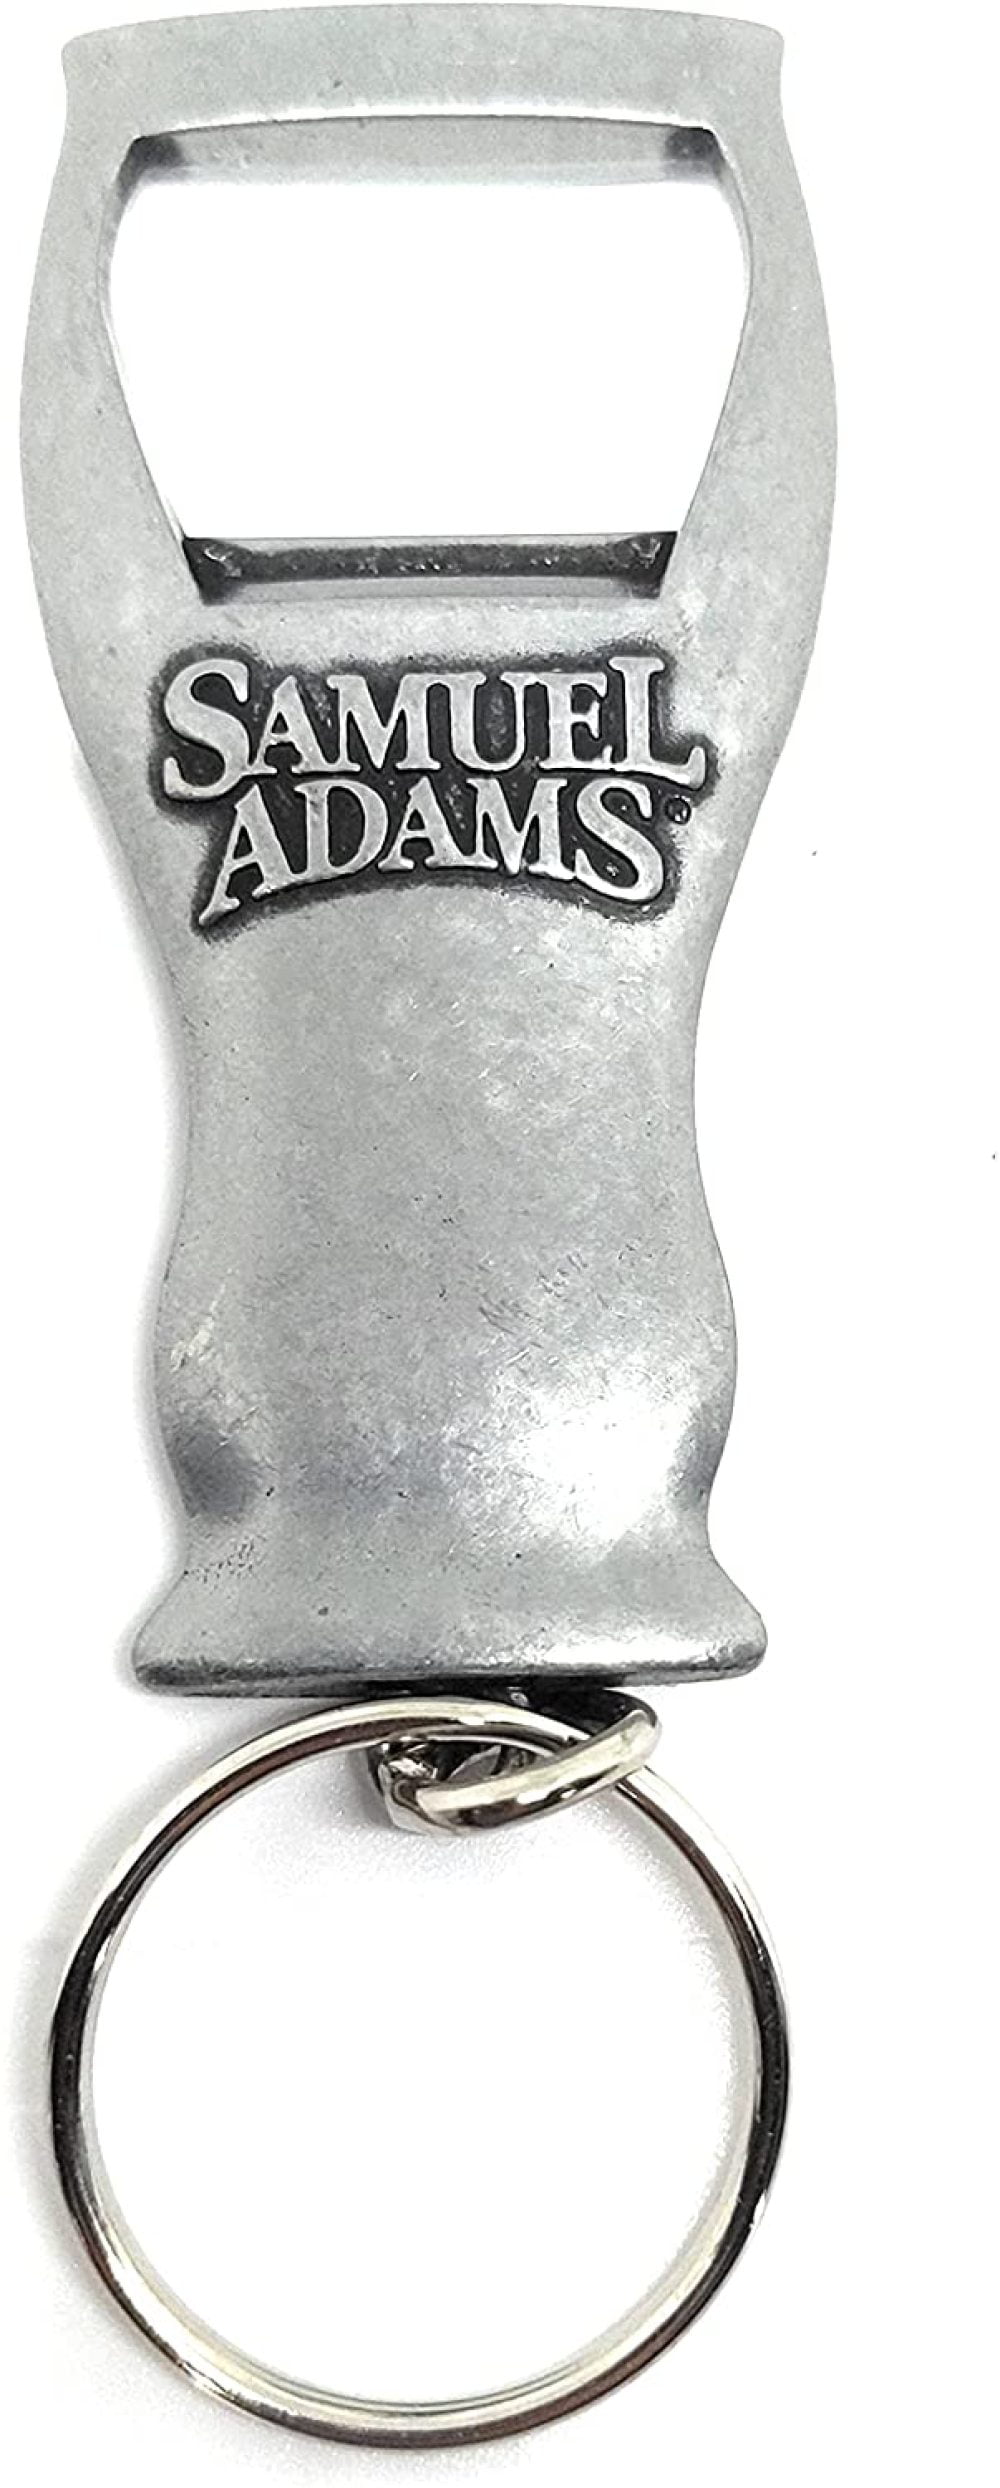 Lot of 5 Samuel Adams Beer Key Chain Bottle Opener Blue Plastic 